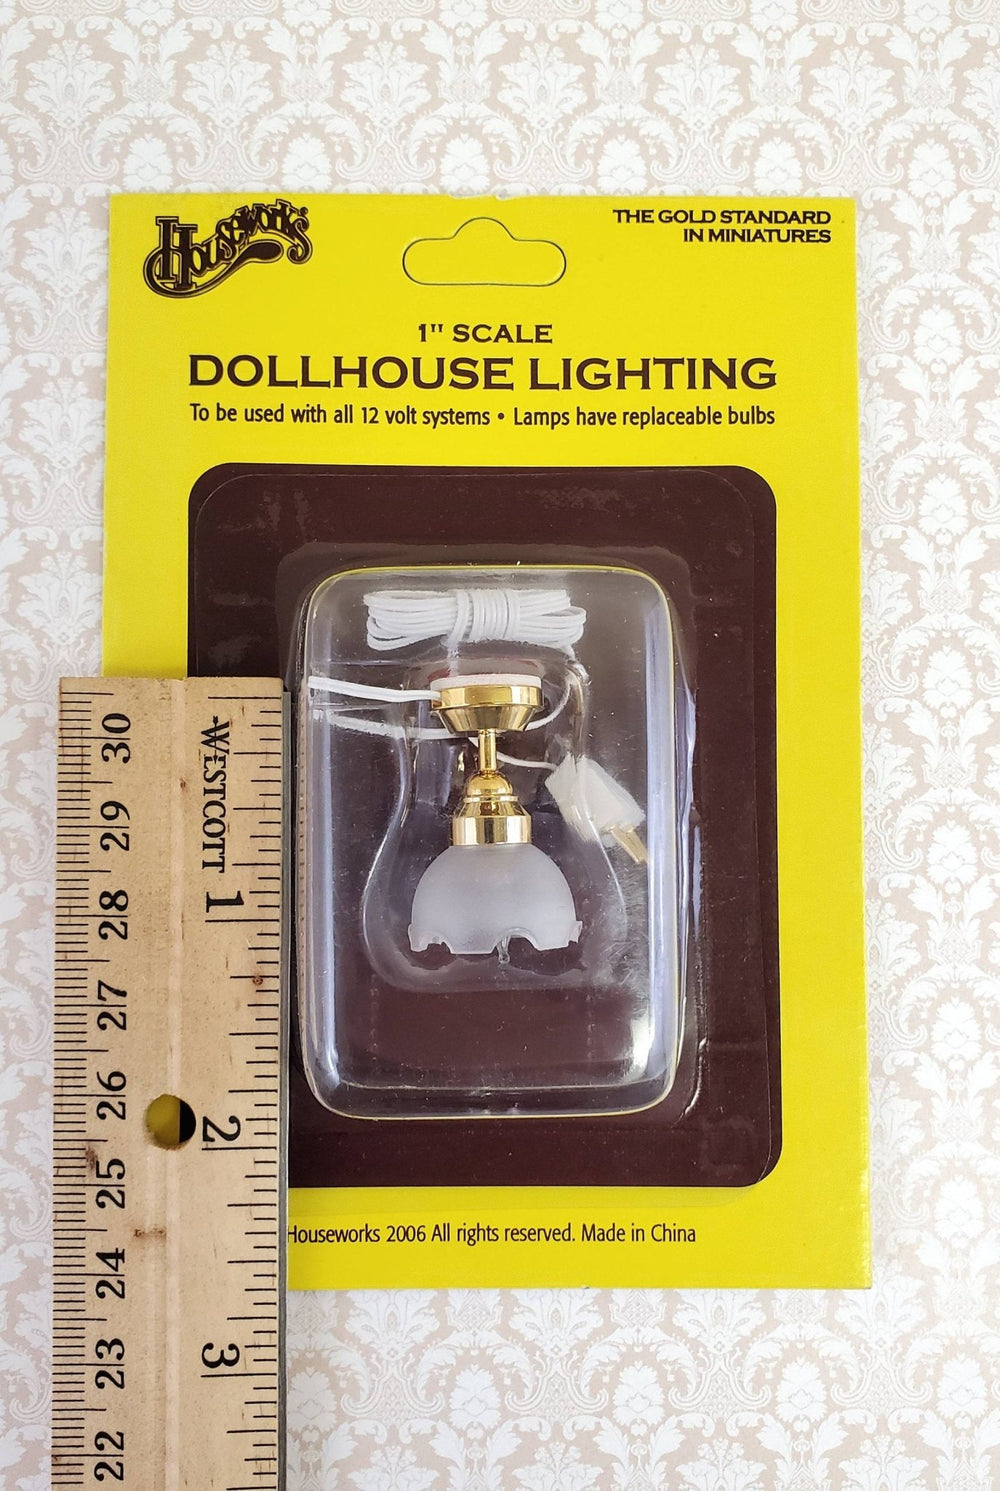 Dollhouse Miniature Tulip Ceiling Light Hanging Electric 1:12 Scale 12 Volt HW2650 - Miniature Crush